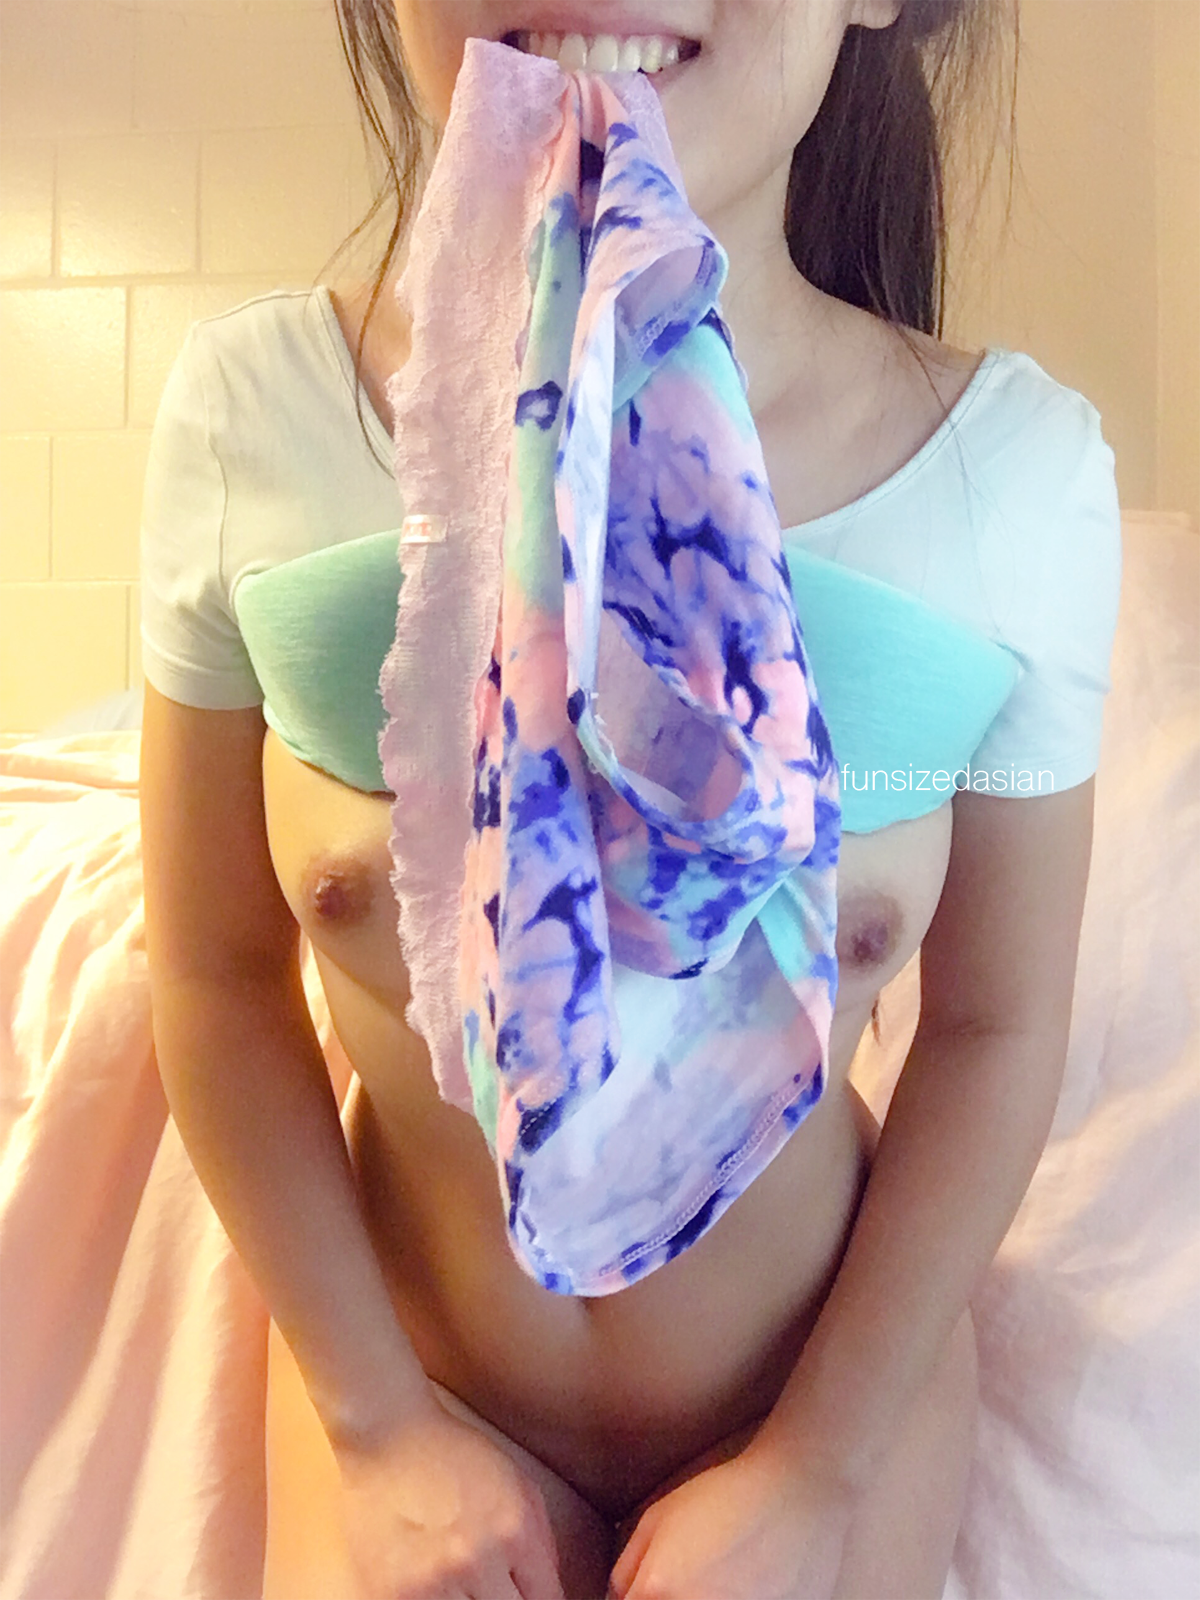 Fun Sized Asian - Victorias's Secret Panties 2.0